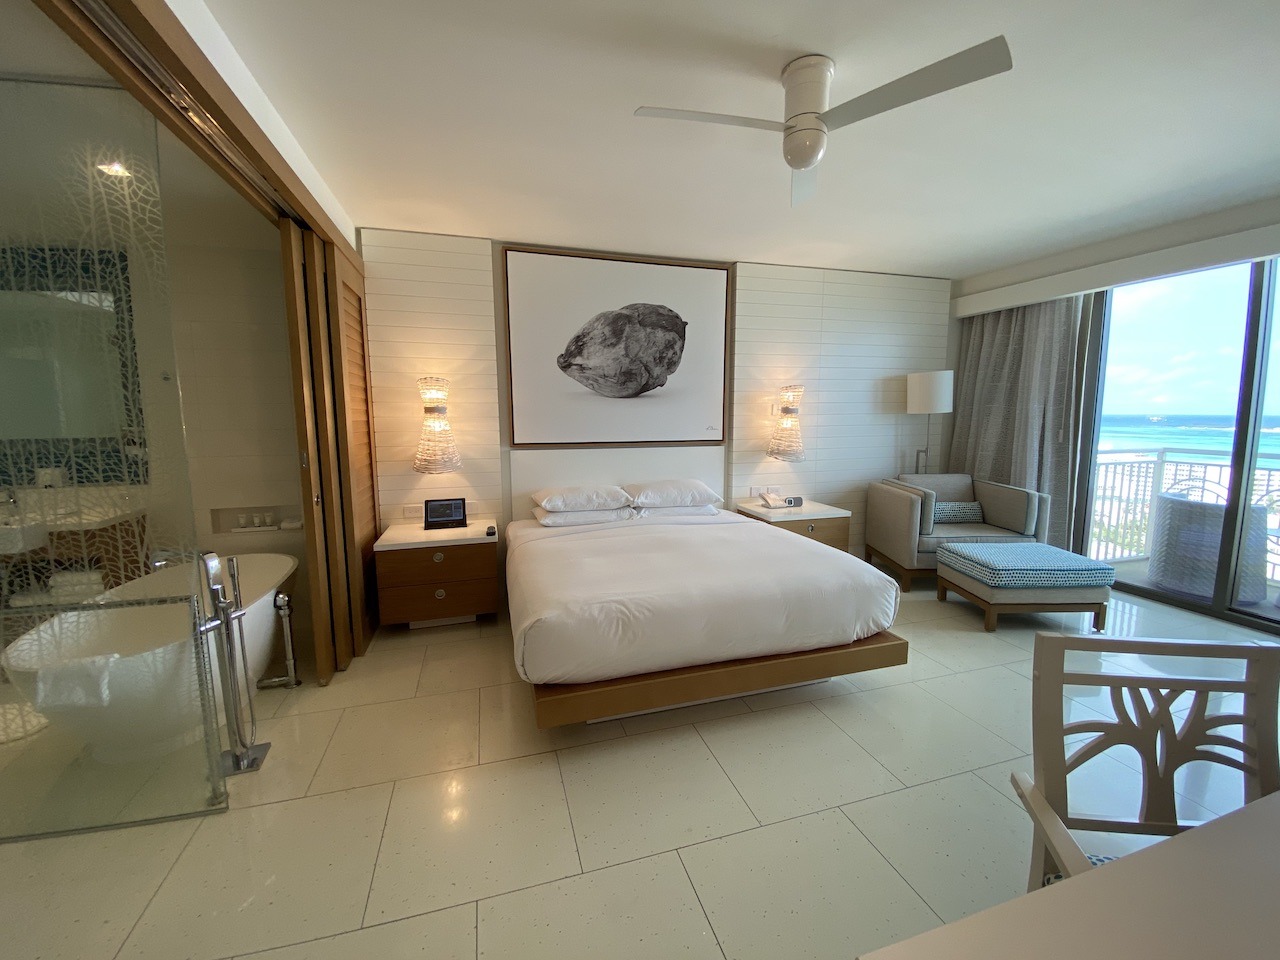 Grand Hyatt Baha Mar suite bedroom with bathroom